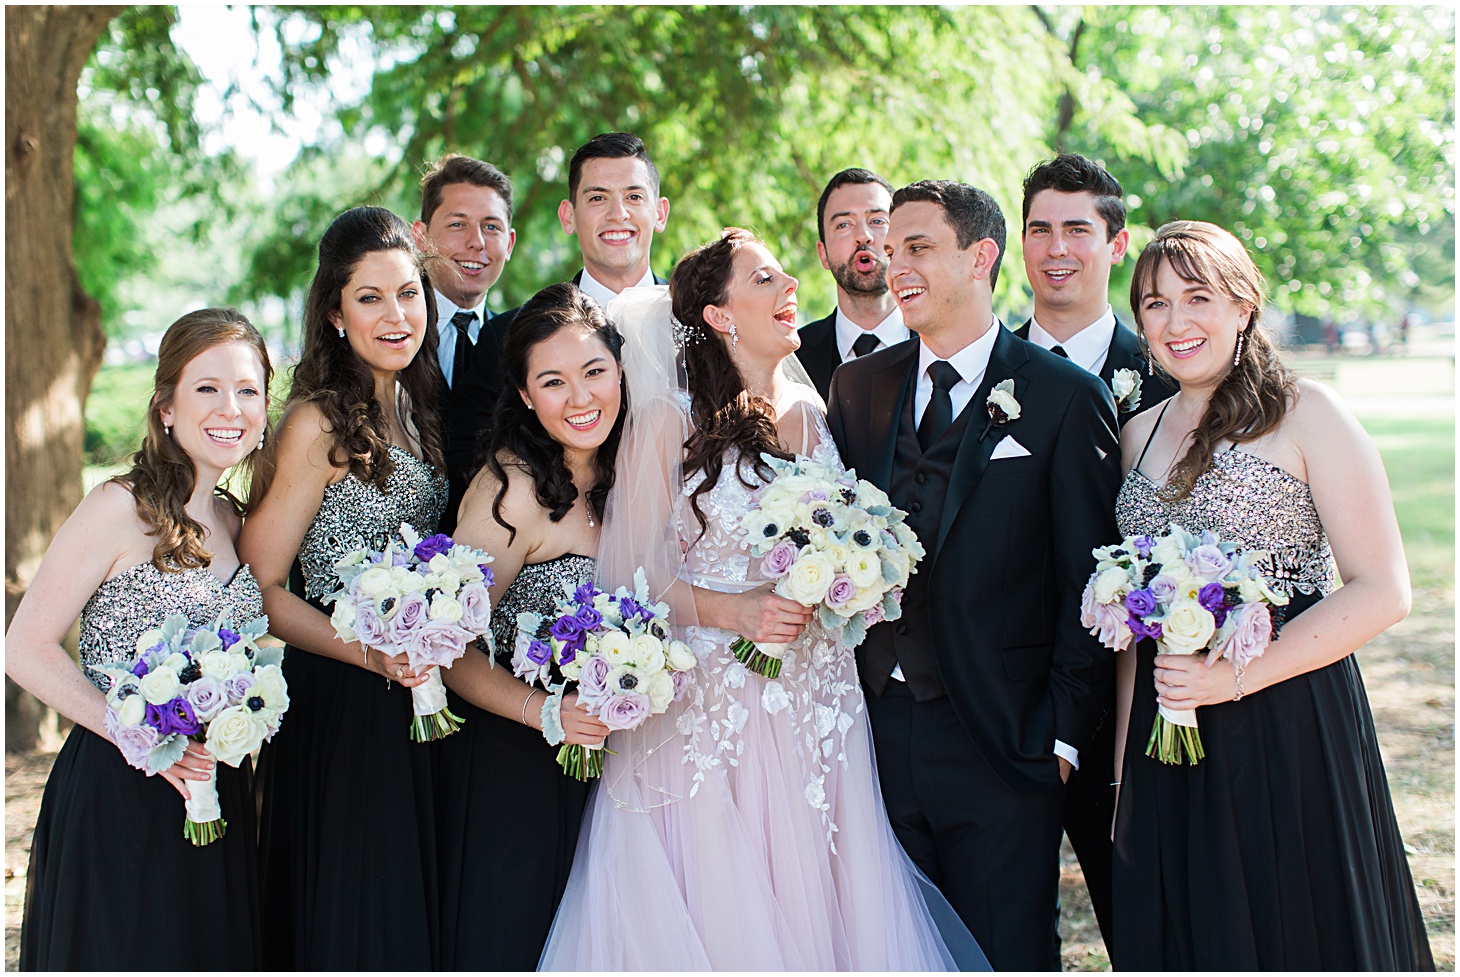 Best of Weddings by Sarah Bradshaw - 2015-16 part 2_0024.jpg